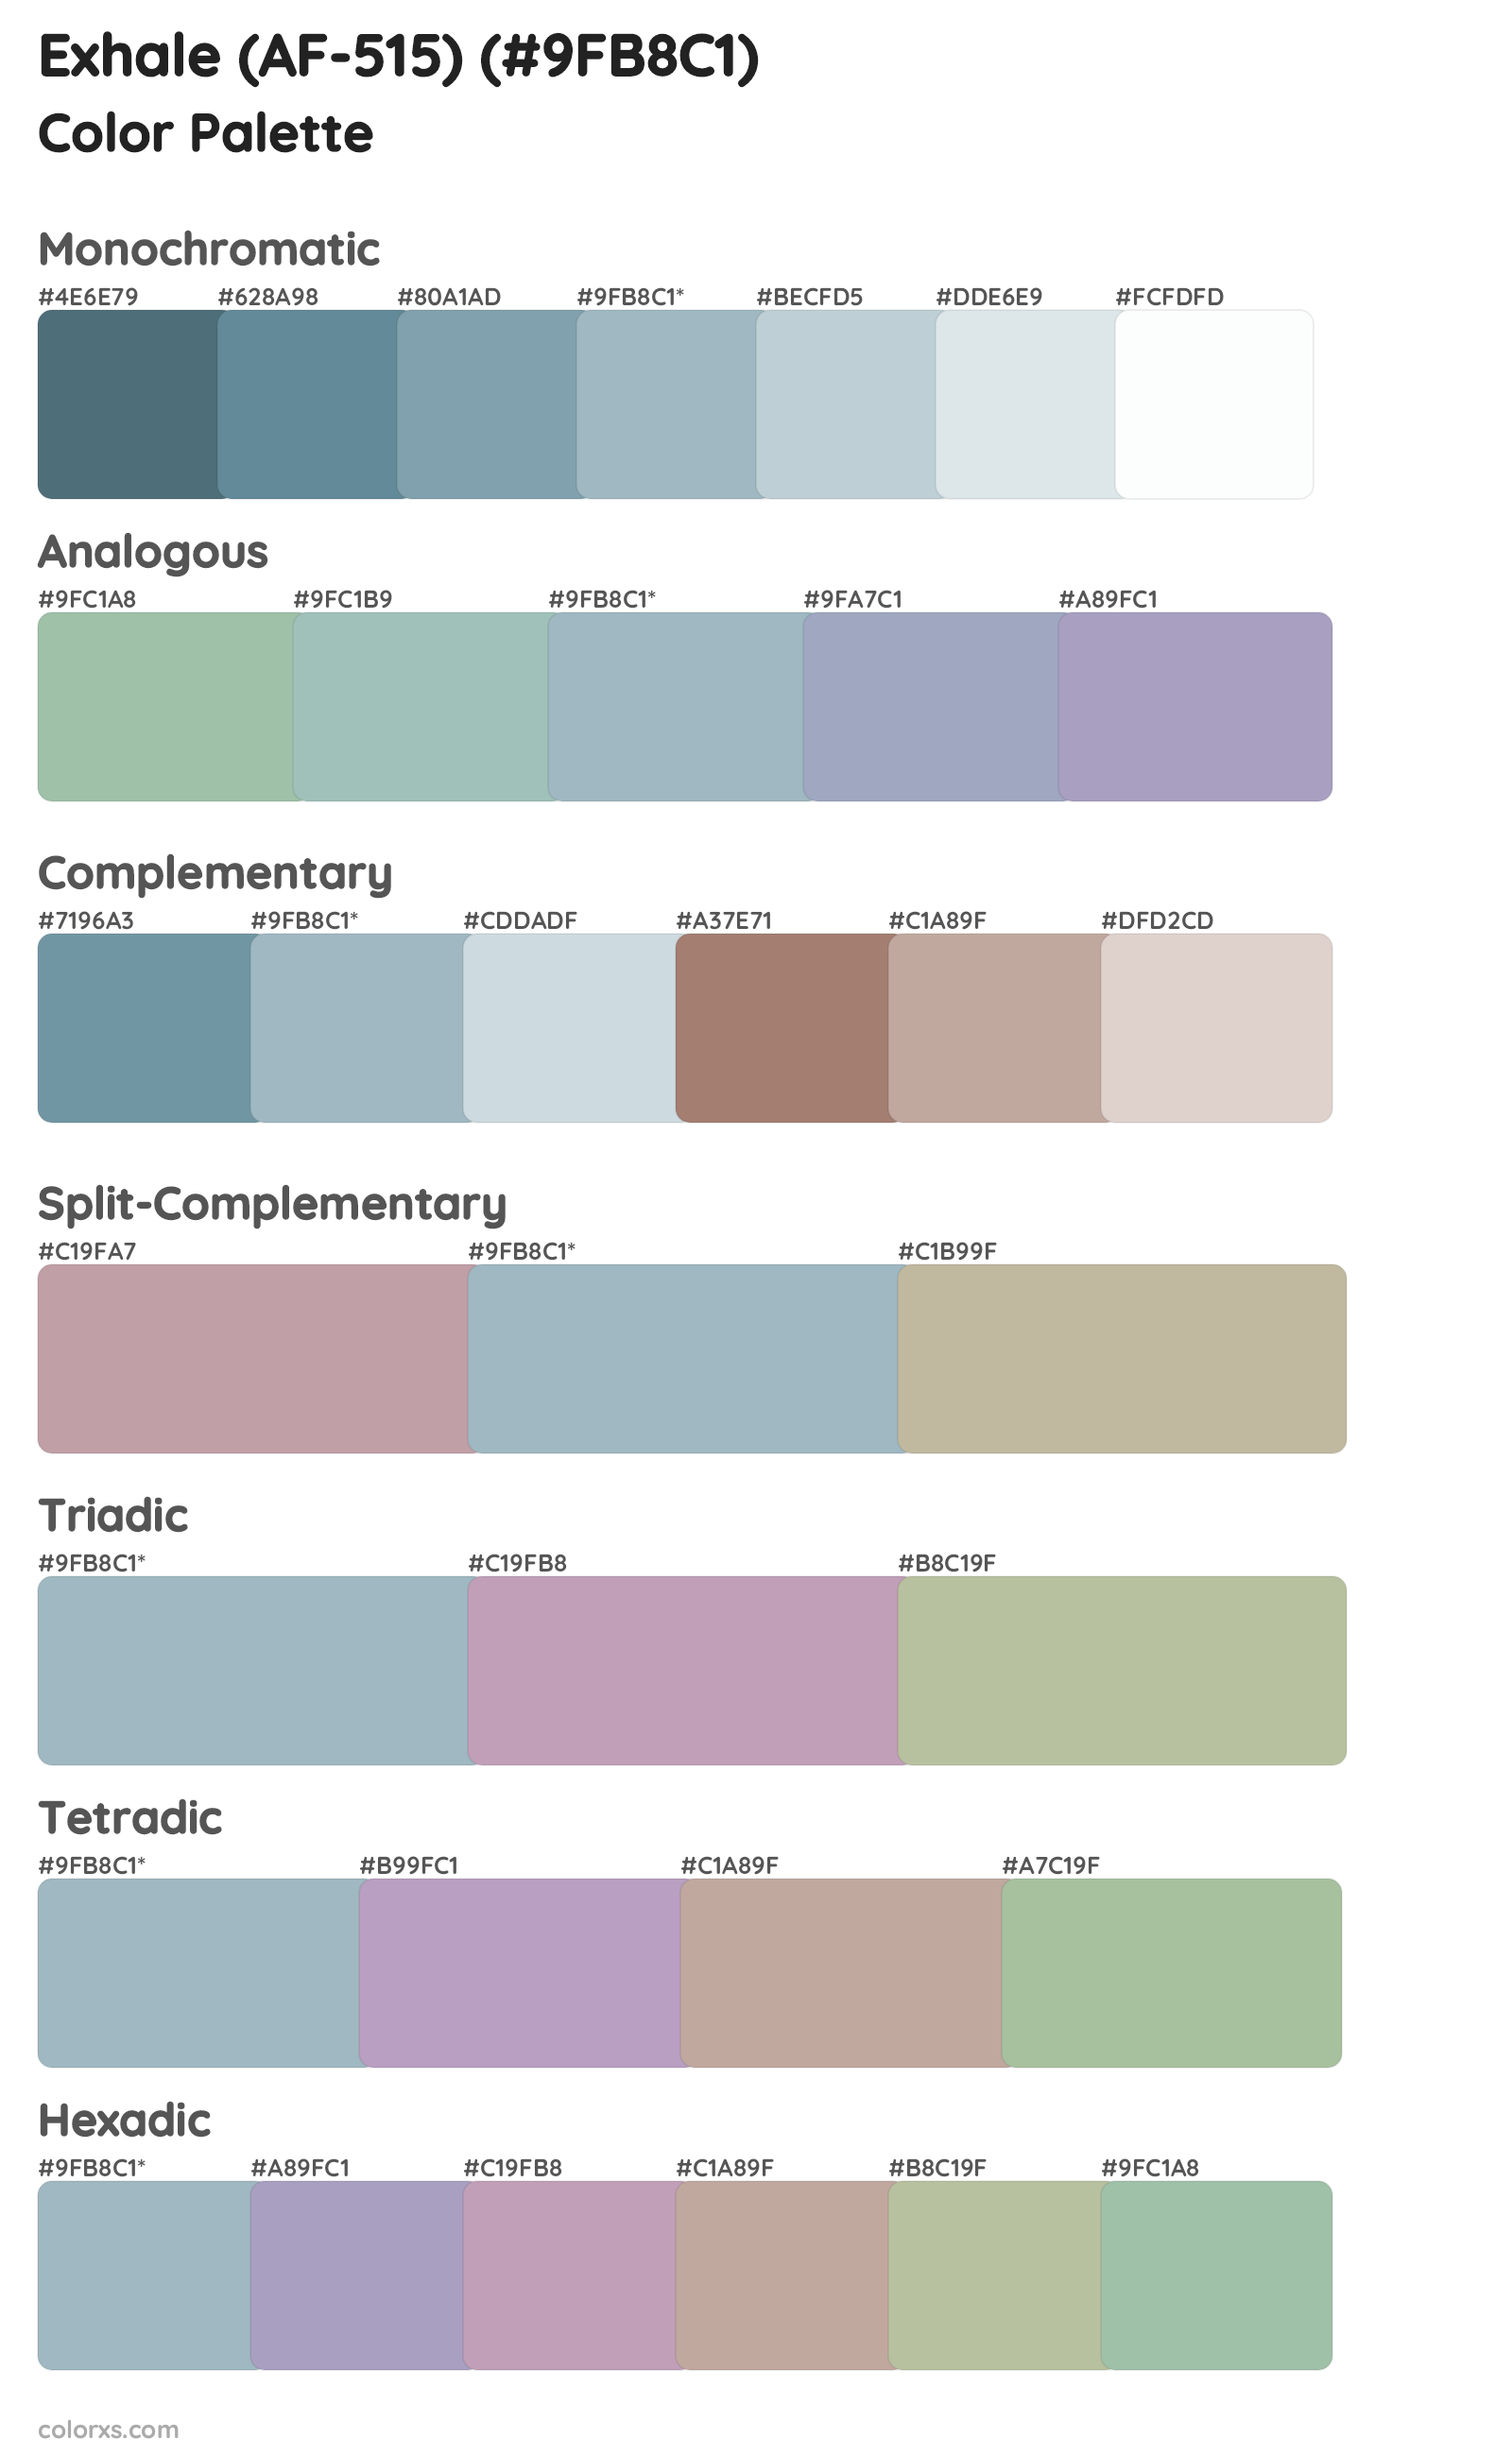 Exhale (AF-515) Color Scheme Palettes